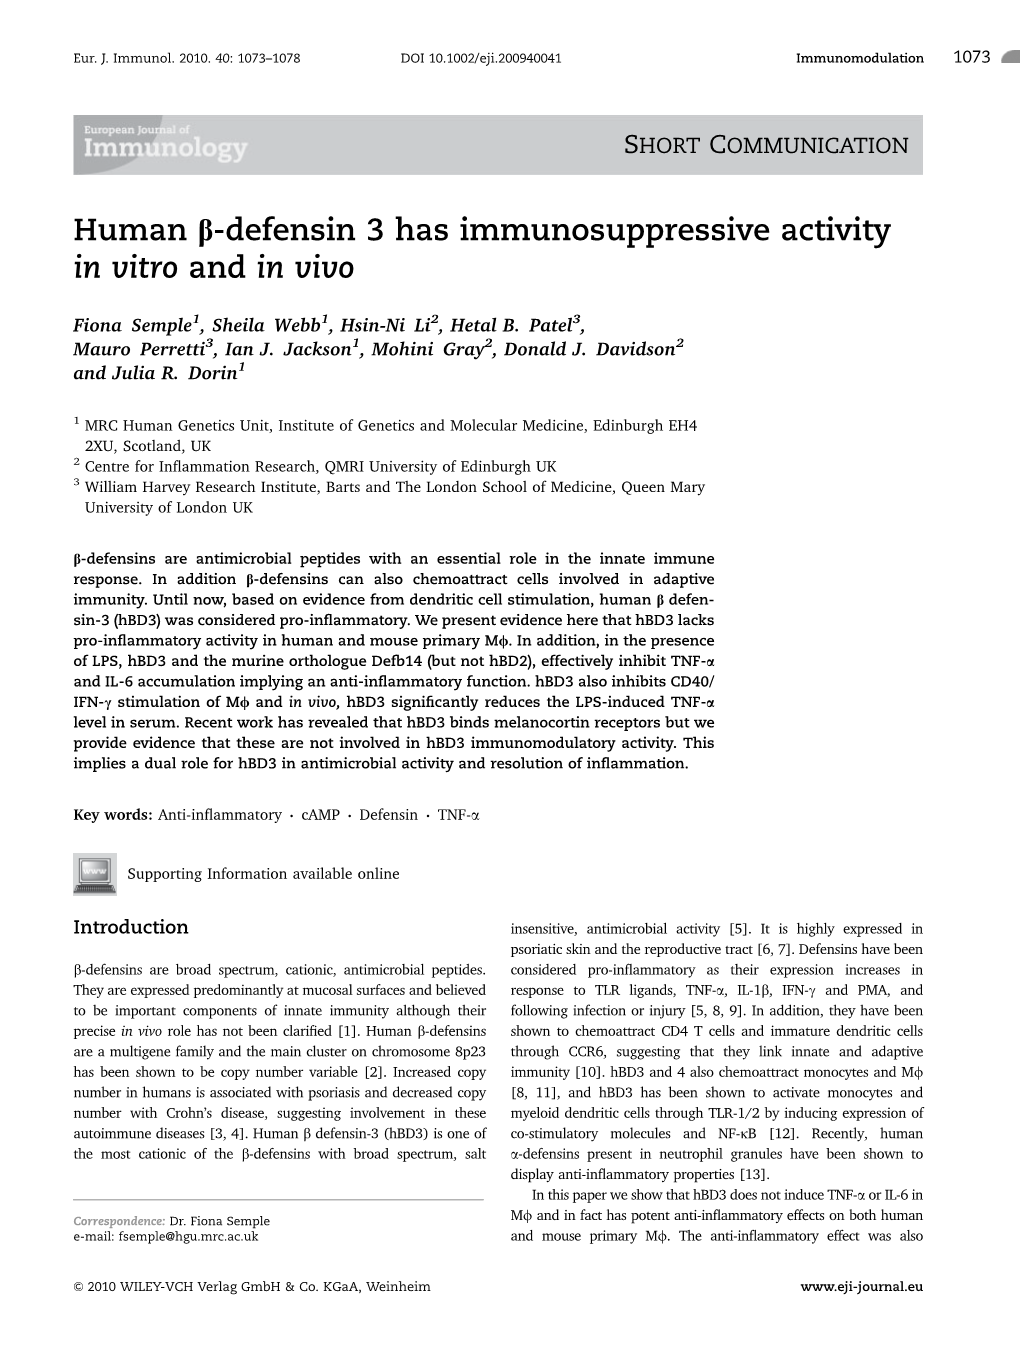 Human B-Defensin 3 Has Immunosuppressive Activity in Vitro and in Vivo